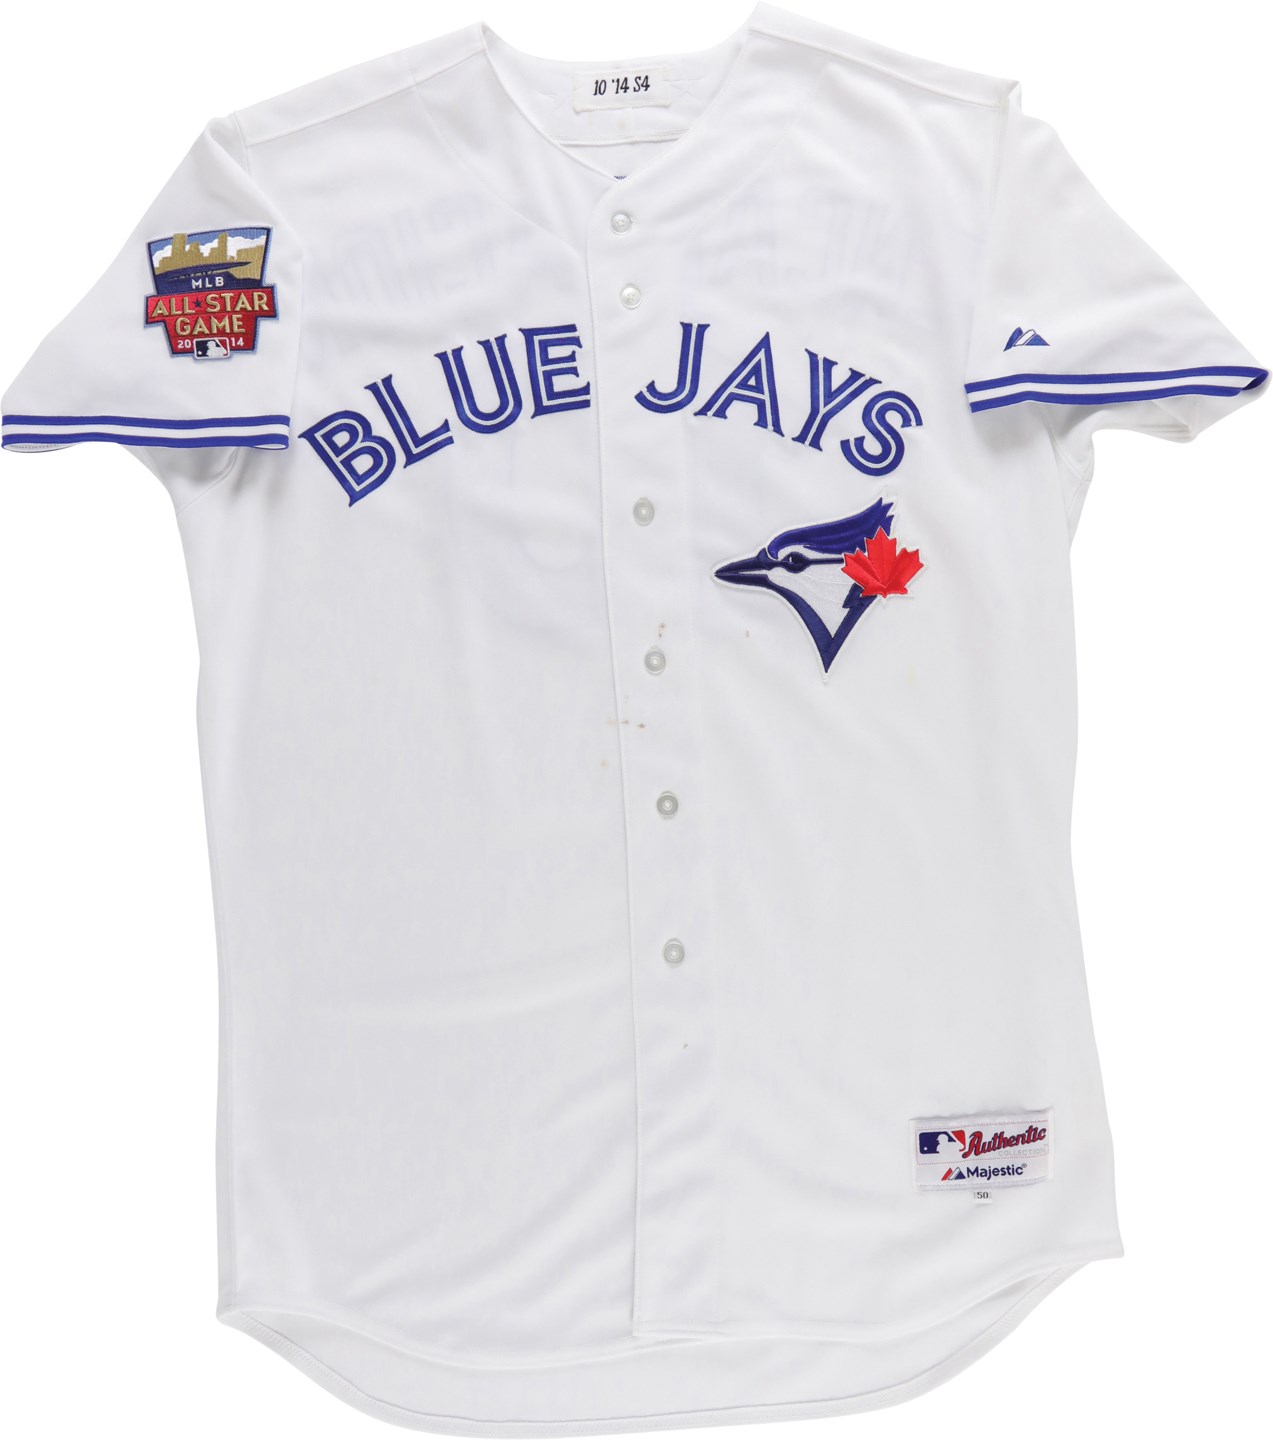 Baseball Equipment - 2014 Edwin Encarnacion "All Star" Toronto Blue Jays Signed Game Jersey